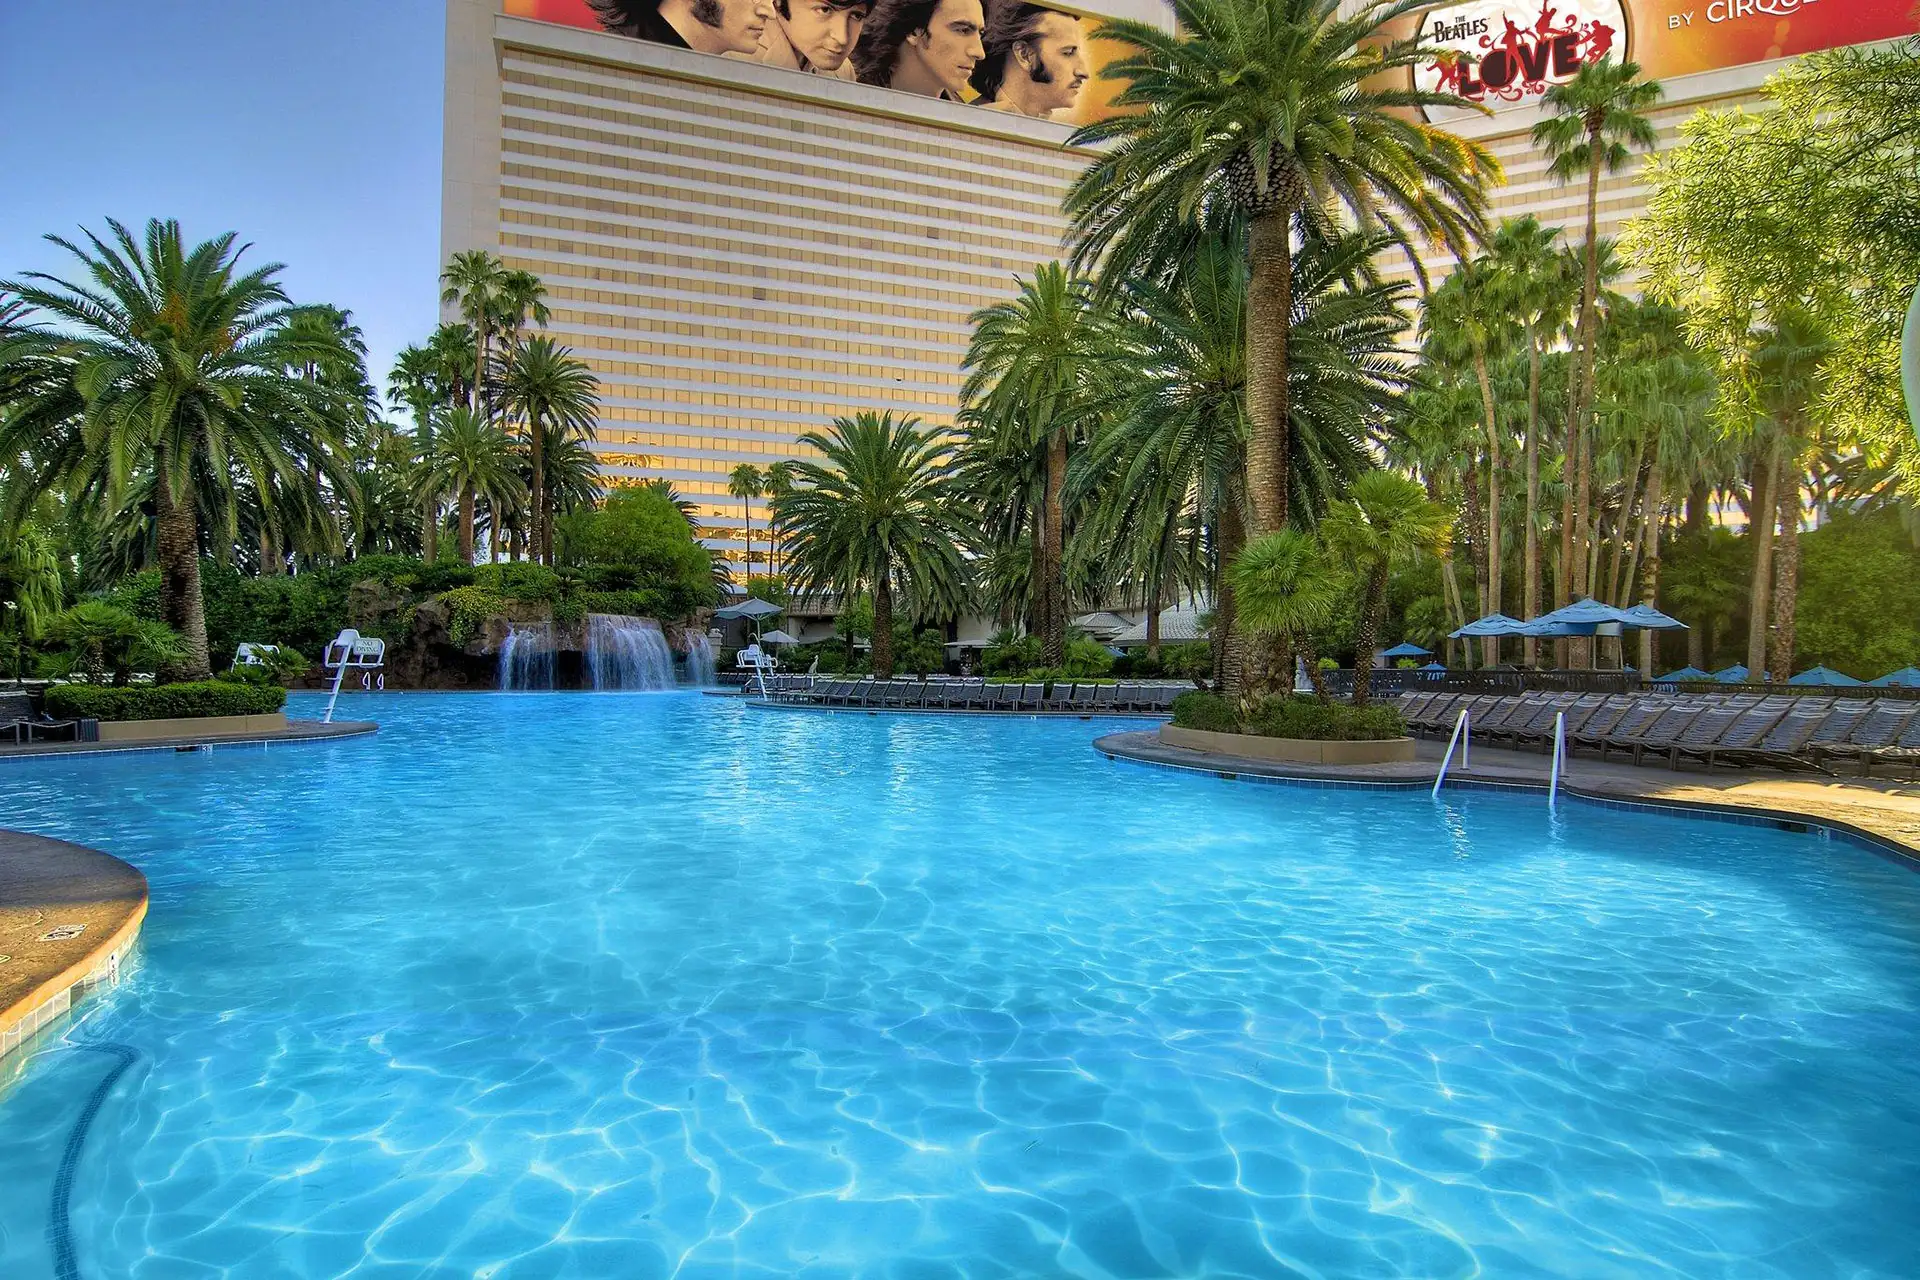 Pool at The Mirage Hotel & Casino in Las Vegas